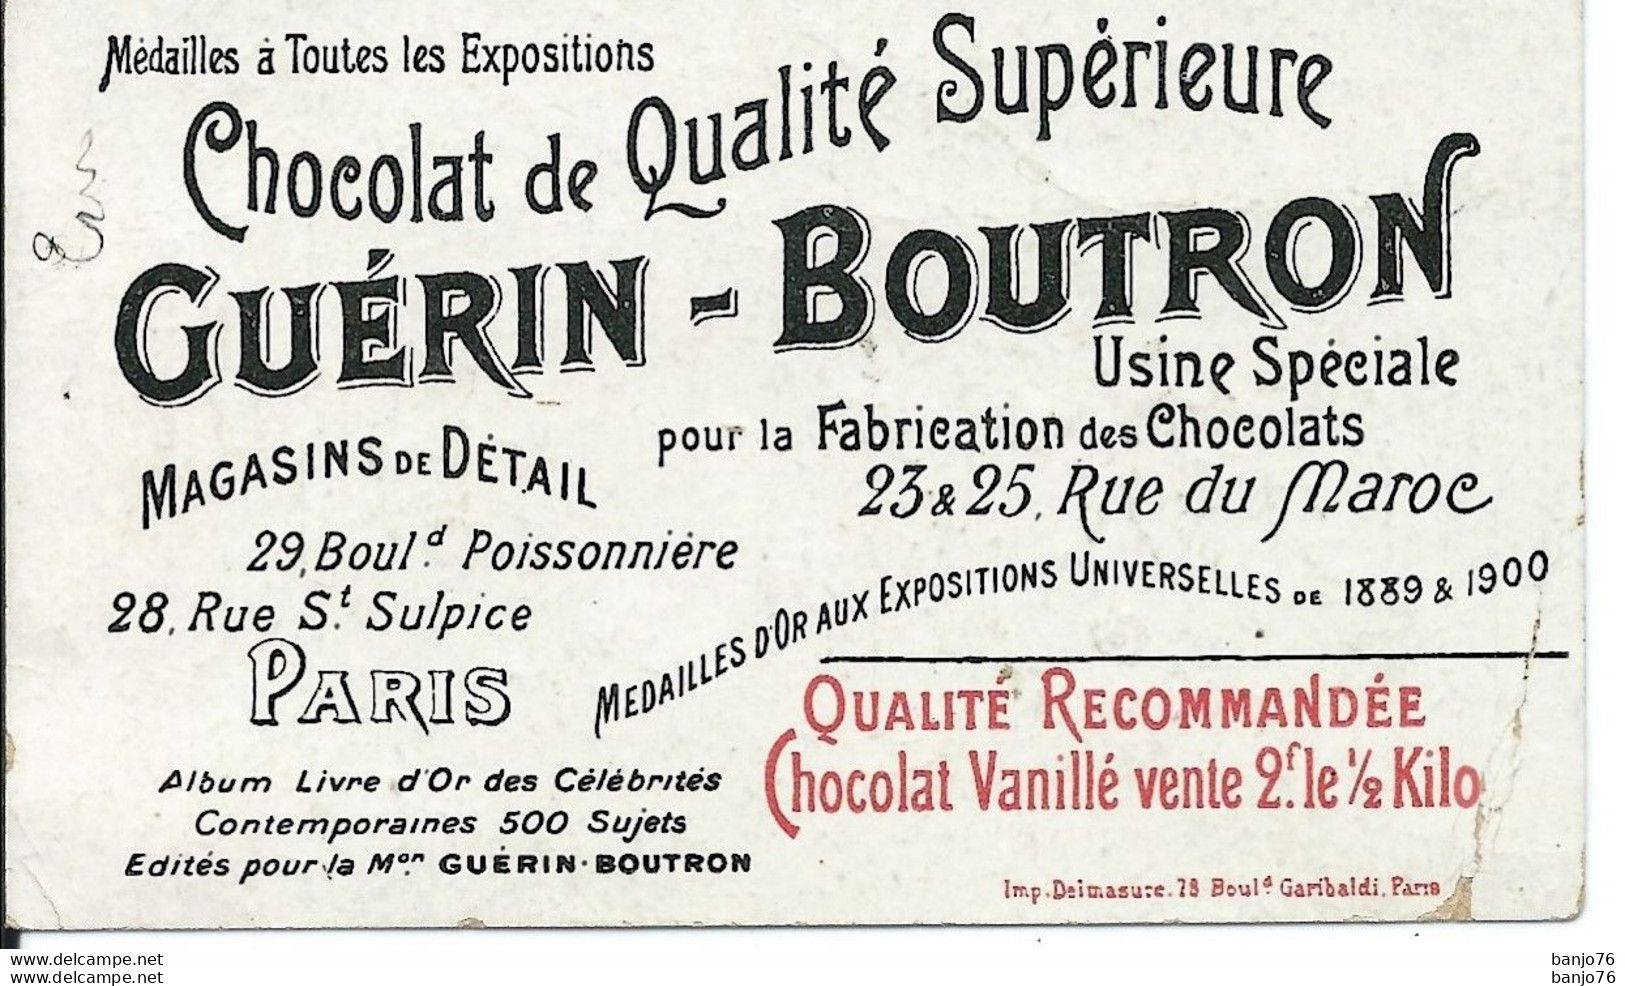 Chromo - Chocolat Guérin Boutron - N° 330 - Princesse Geneviève Adolphe De Suède - Guerin Boutron